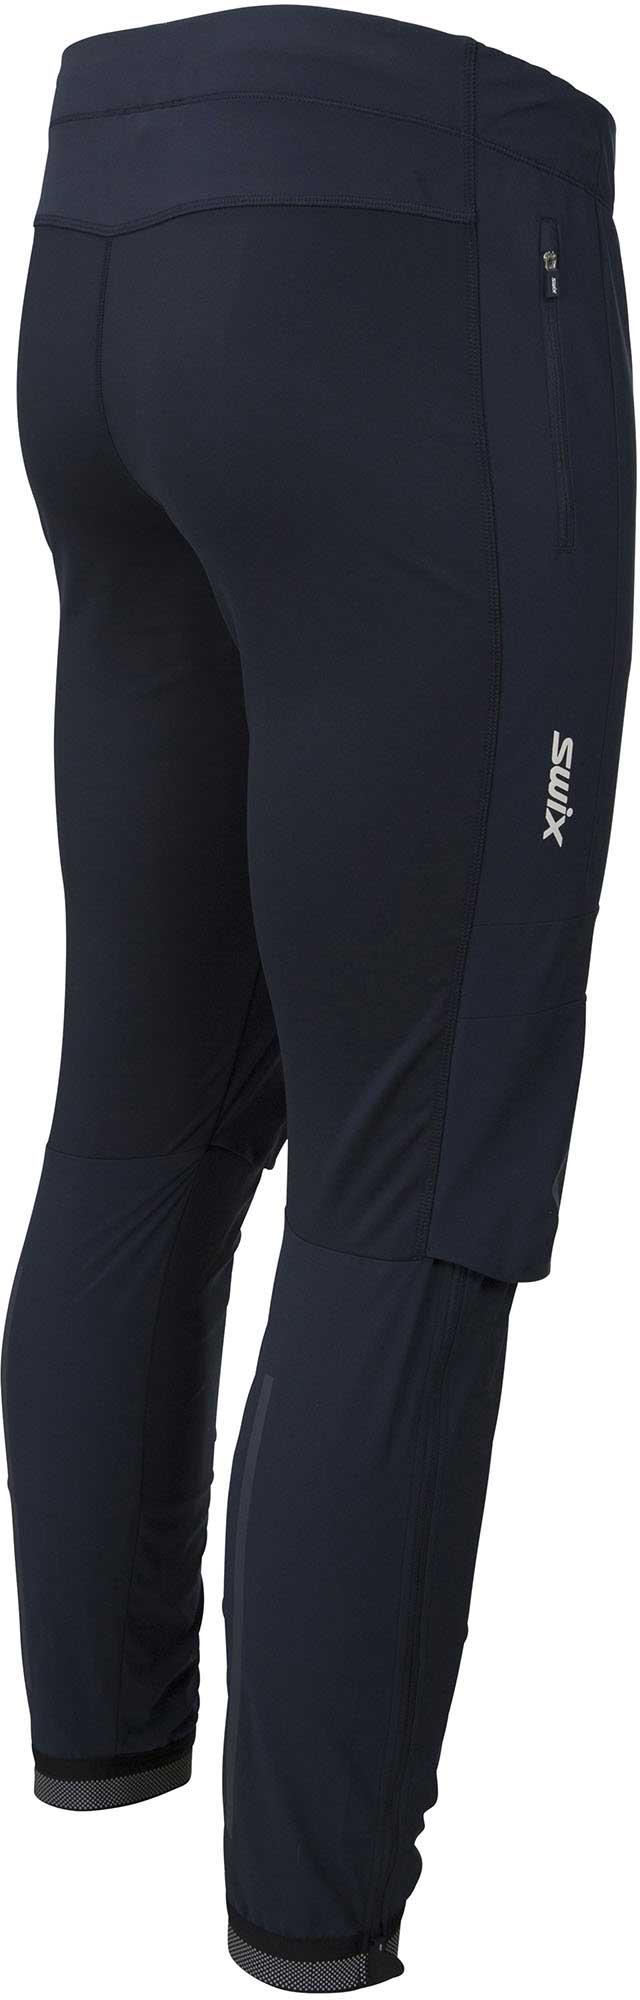 Men’s Nordic ski pants